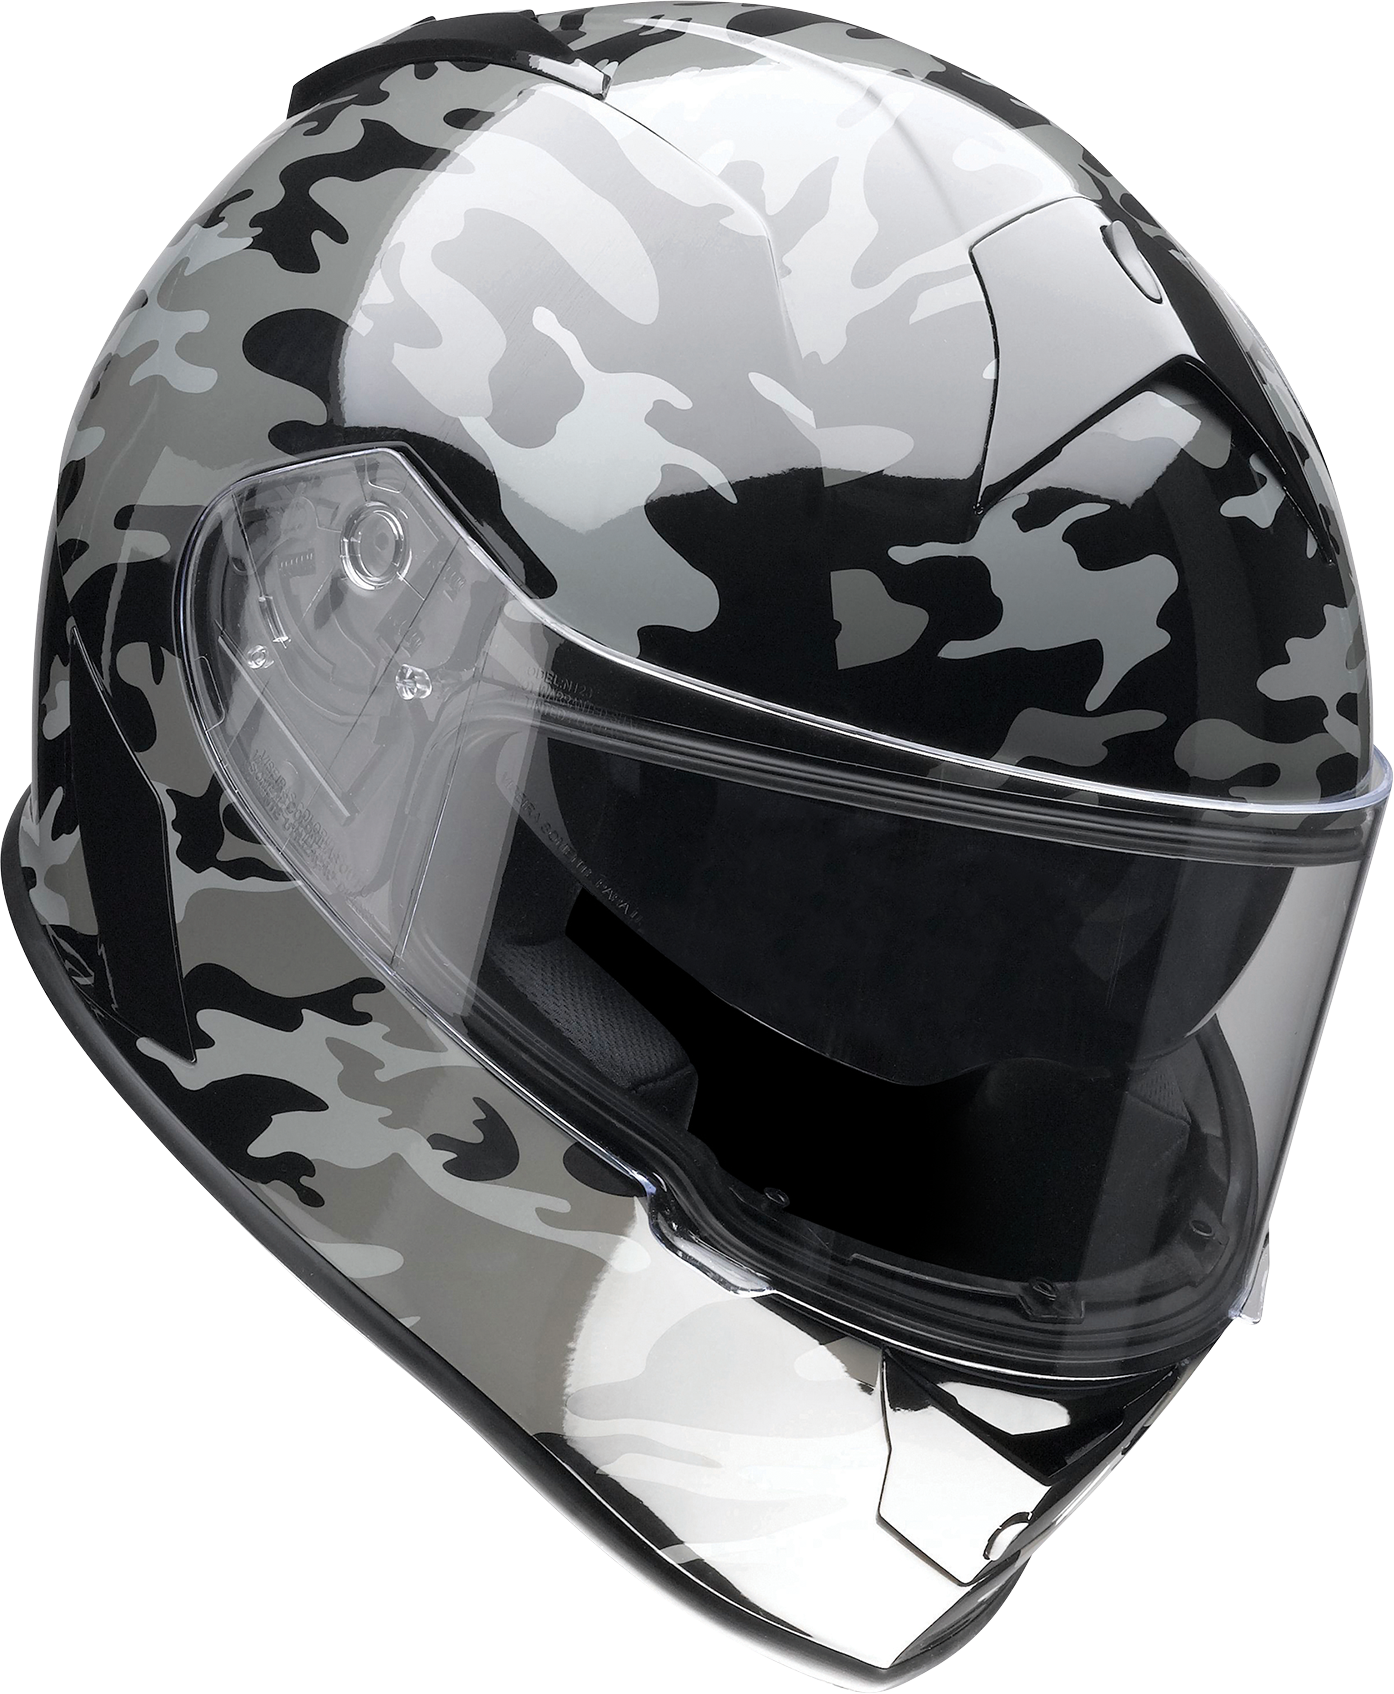 Z1R Warrant Camo Unisex Adult Full face Motorcycle Riding Street Racing Helmet